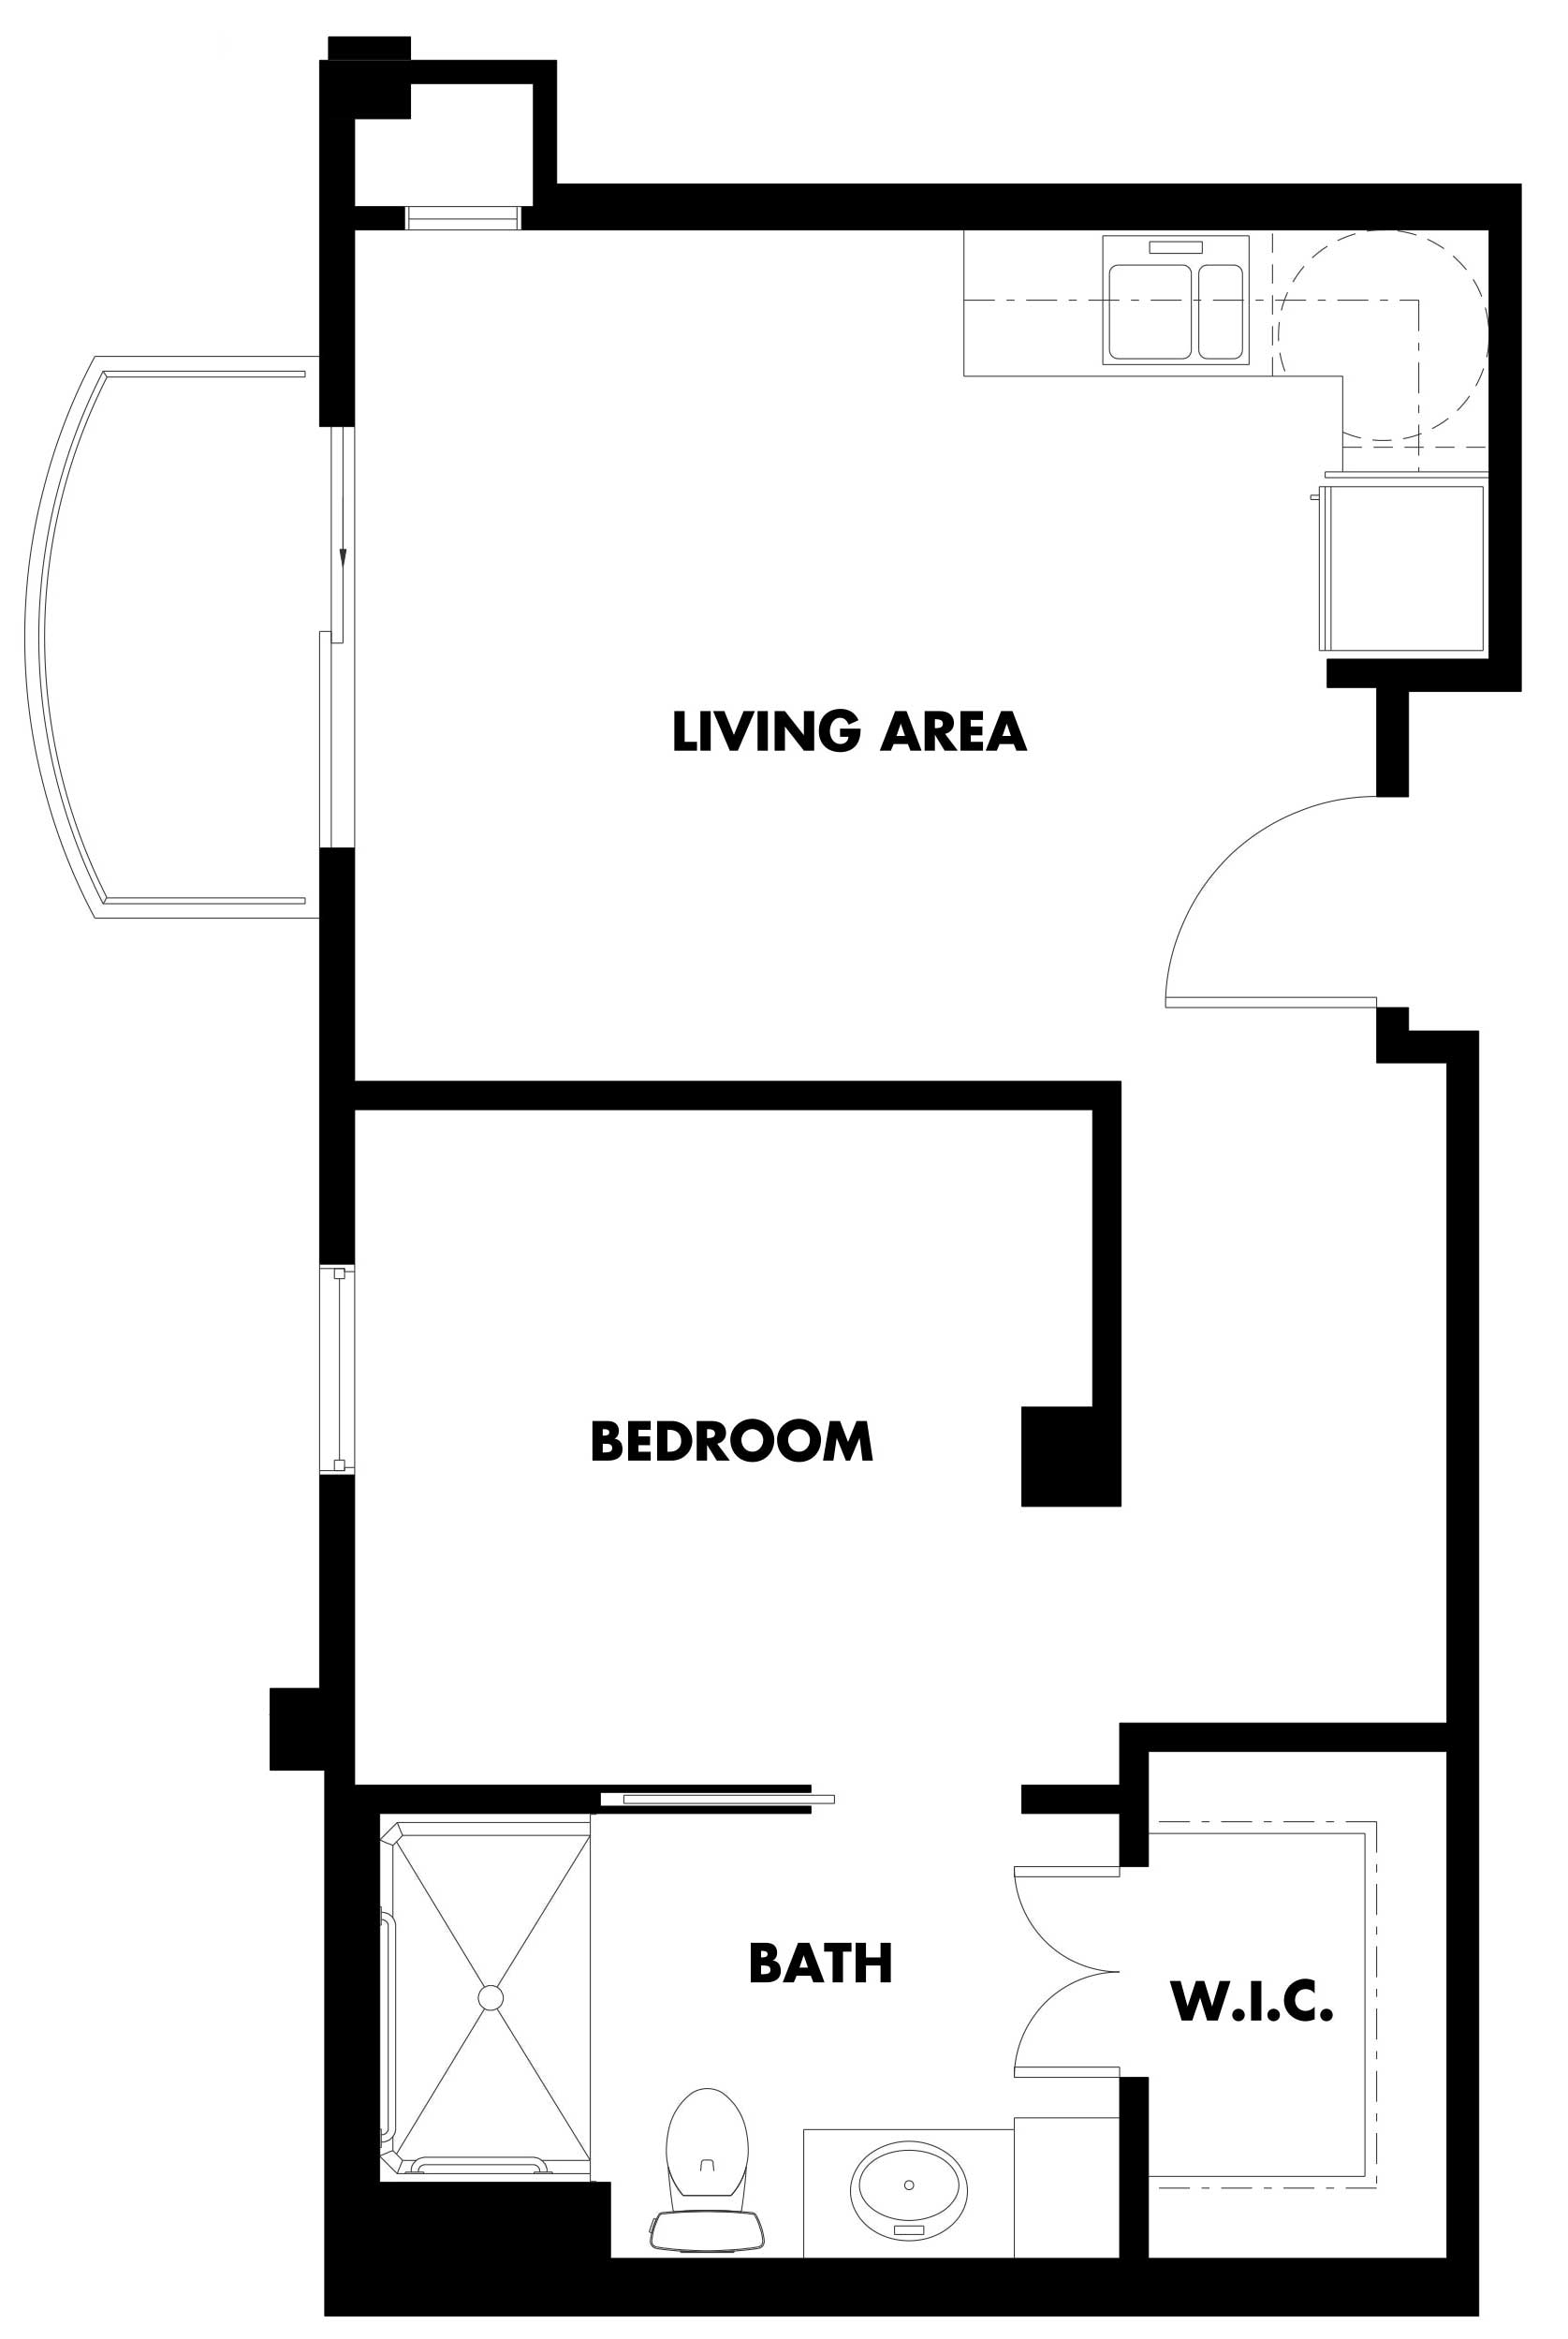 a one bedroom kensington floor plan at Kingswood Senior Living Located in Kansas City, MO.